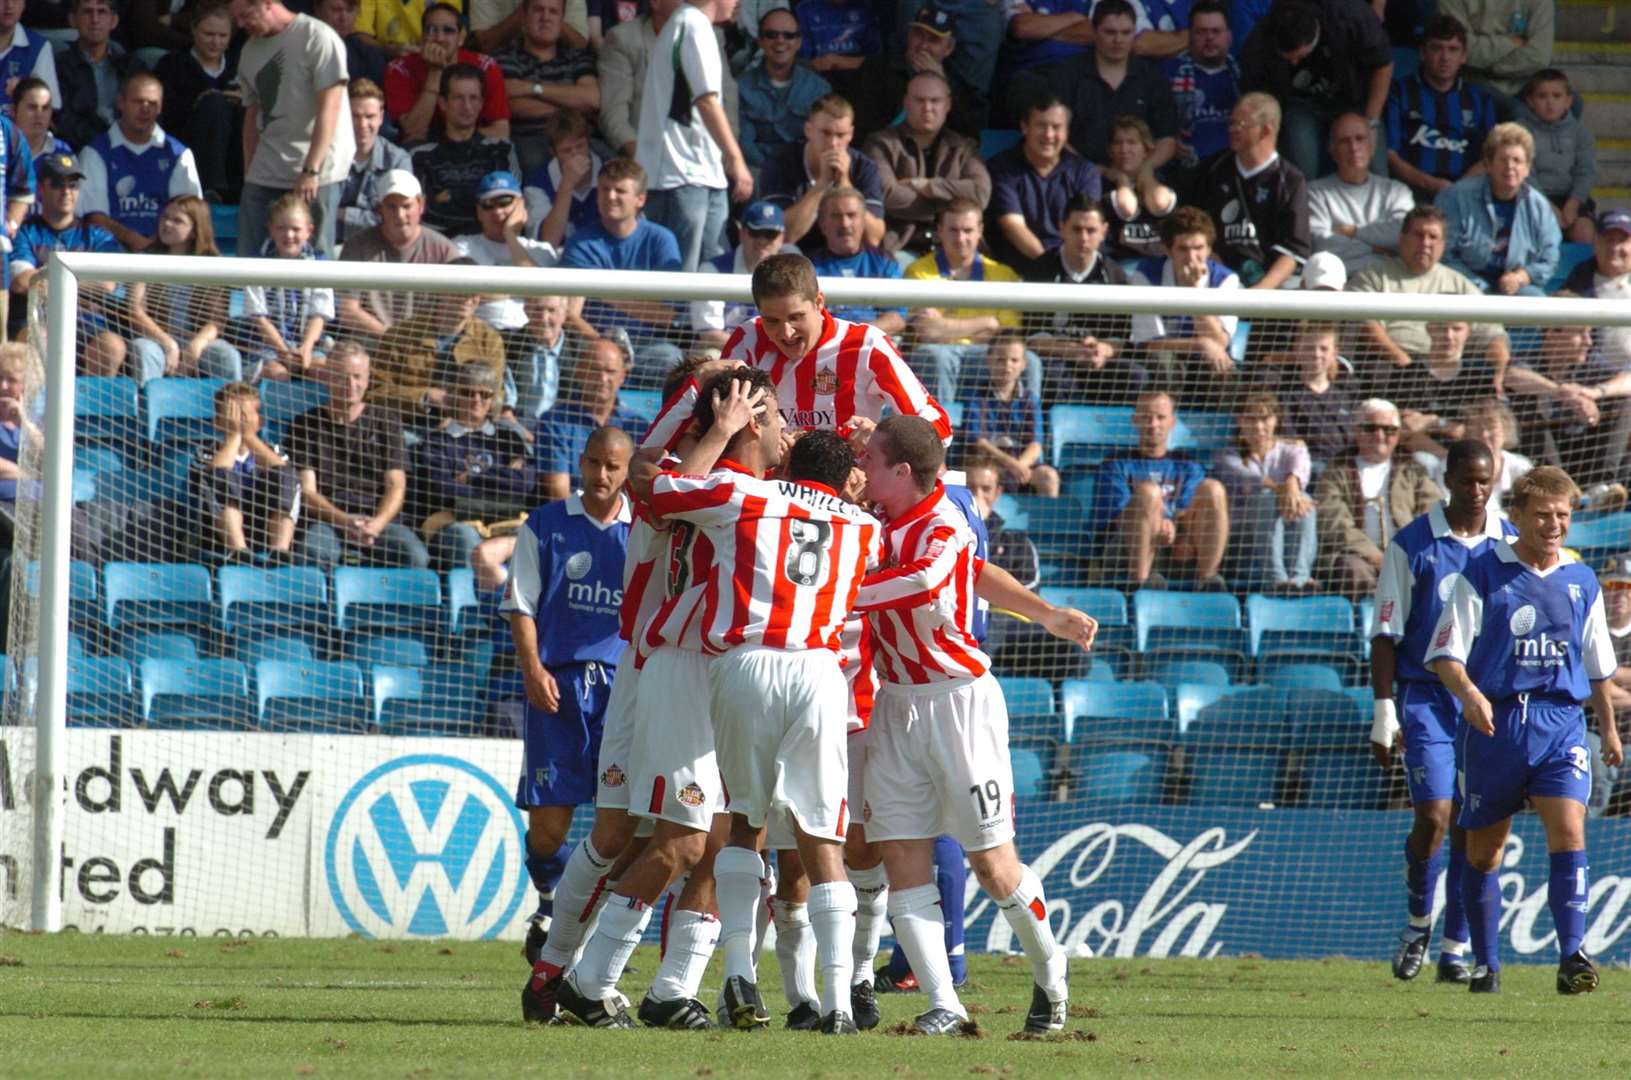 Sunderland won 4-0 on their last visit to Priestfield in 2004